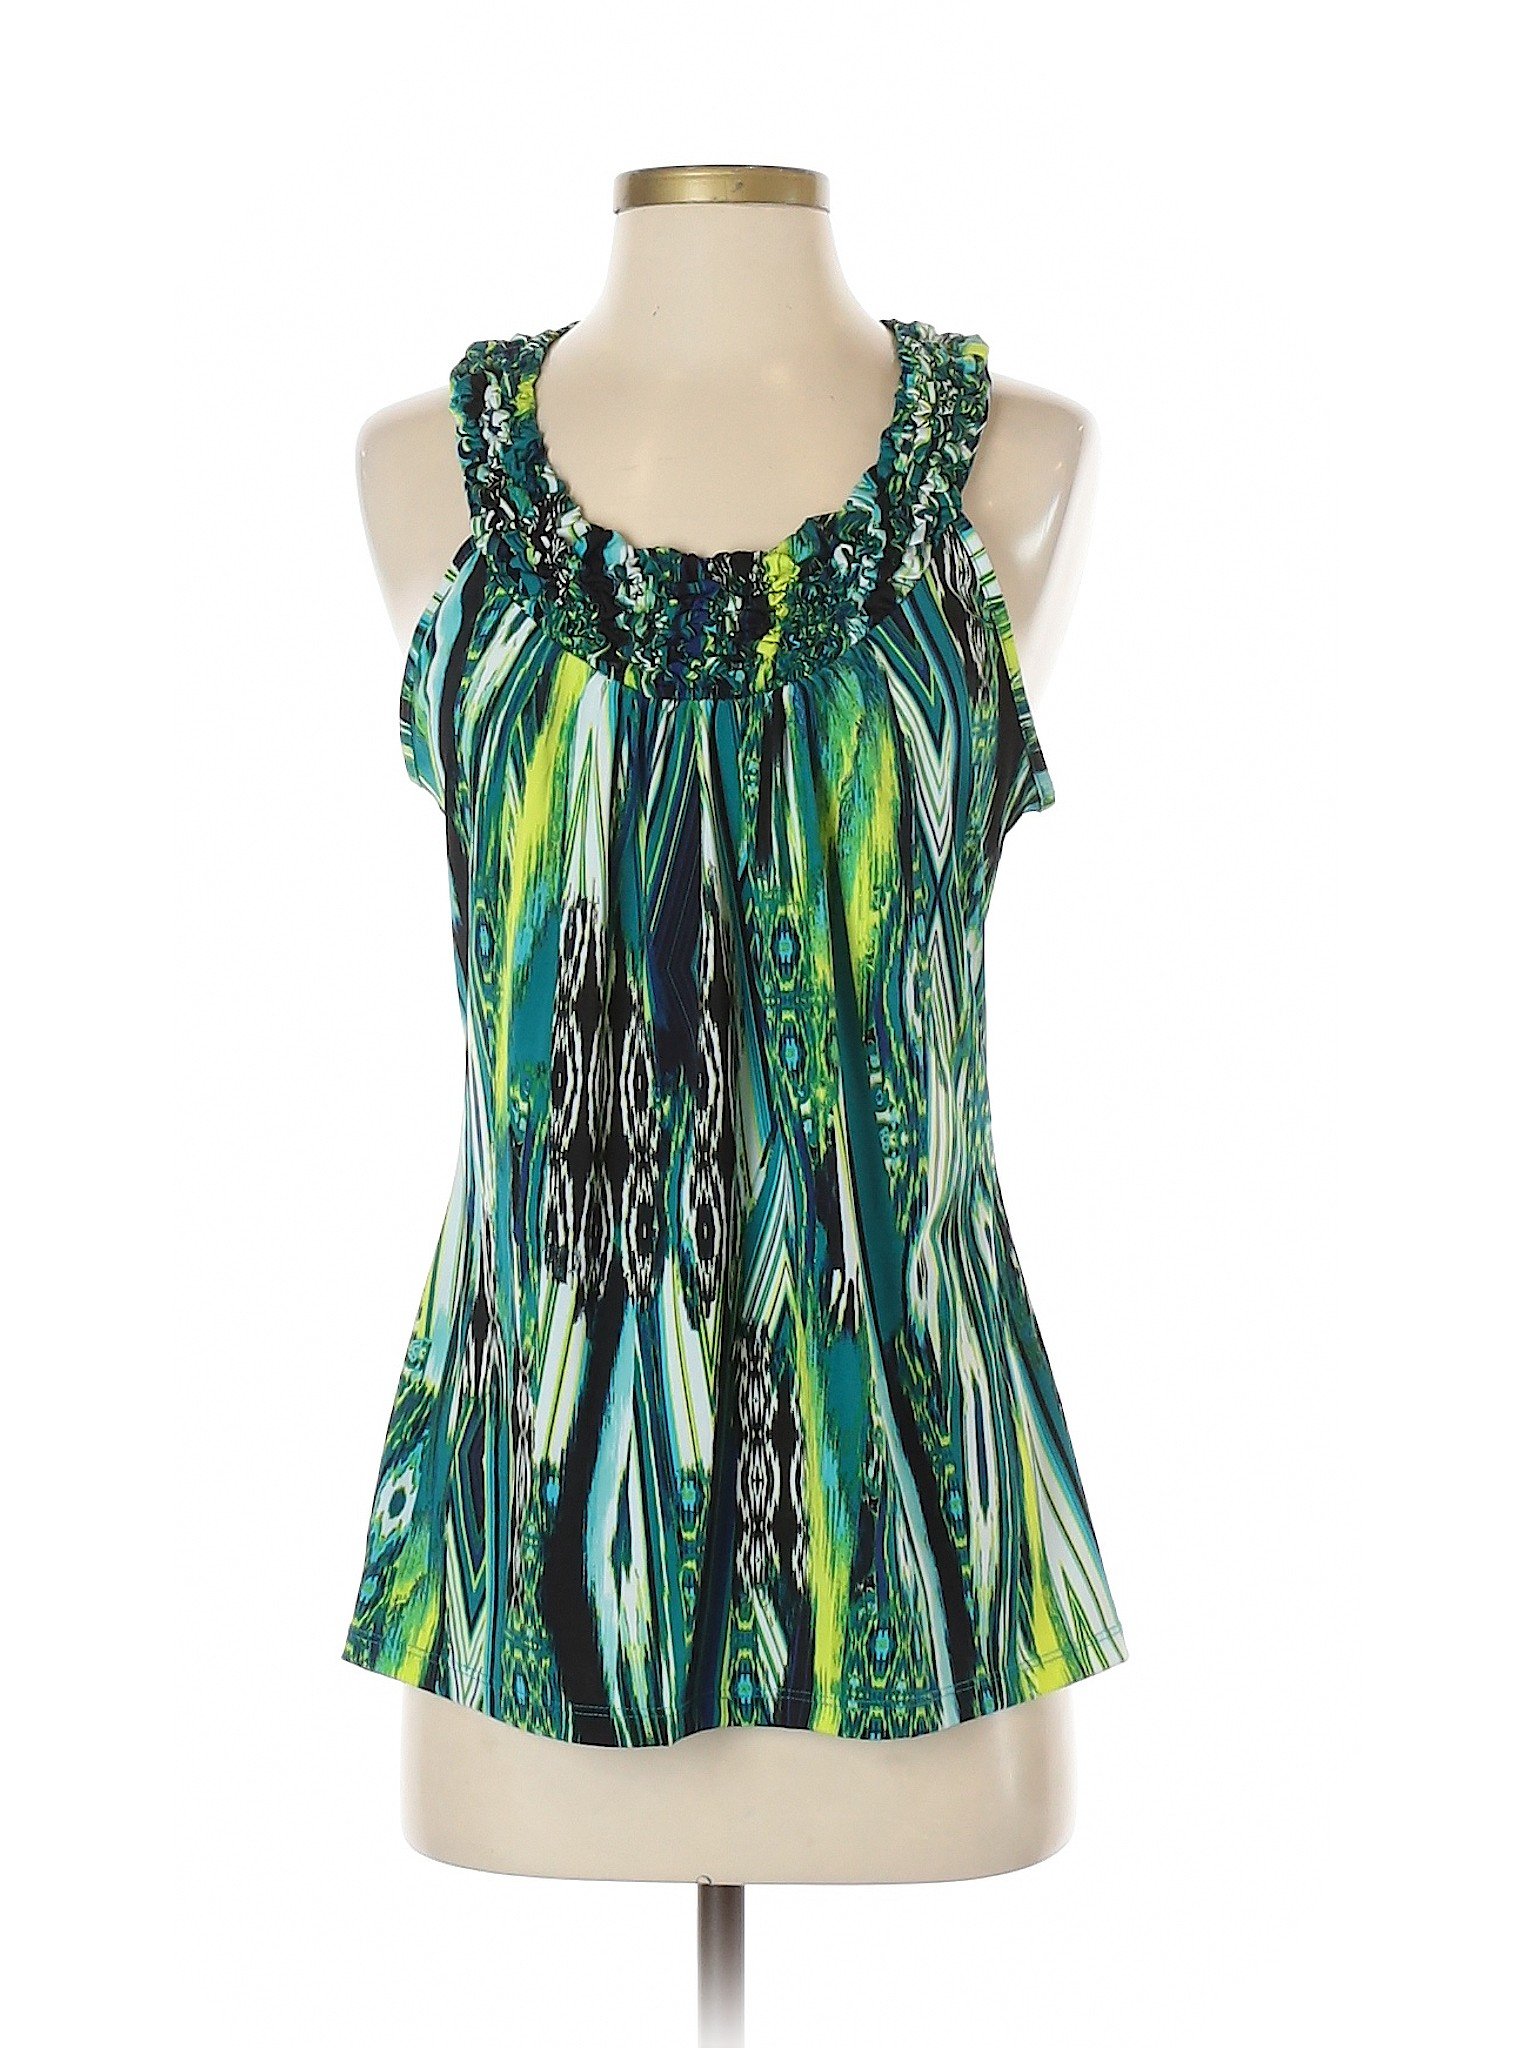 Cocomo Women Green Sleeveless Blouse M | eBay